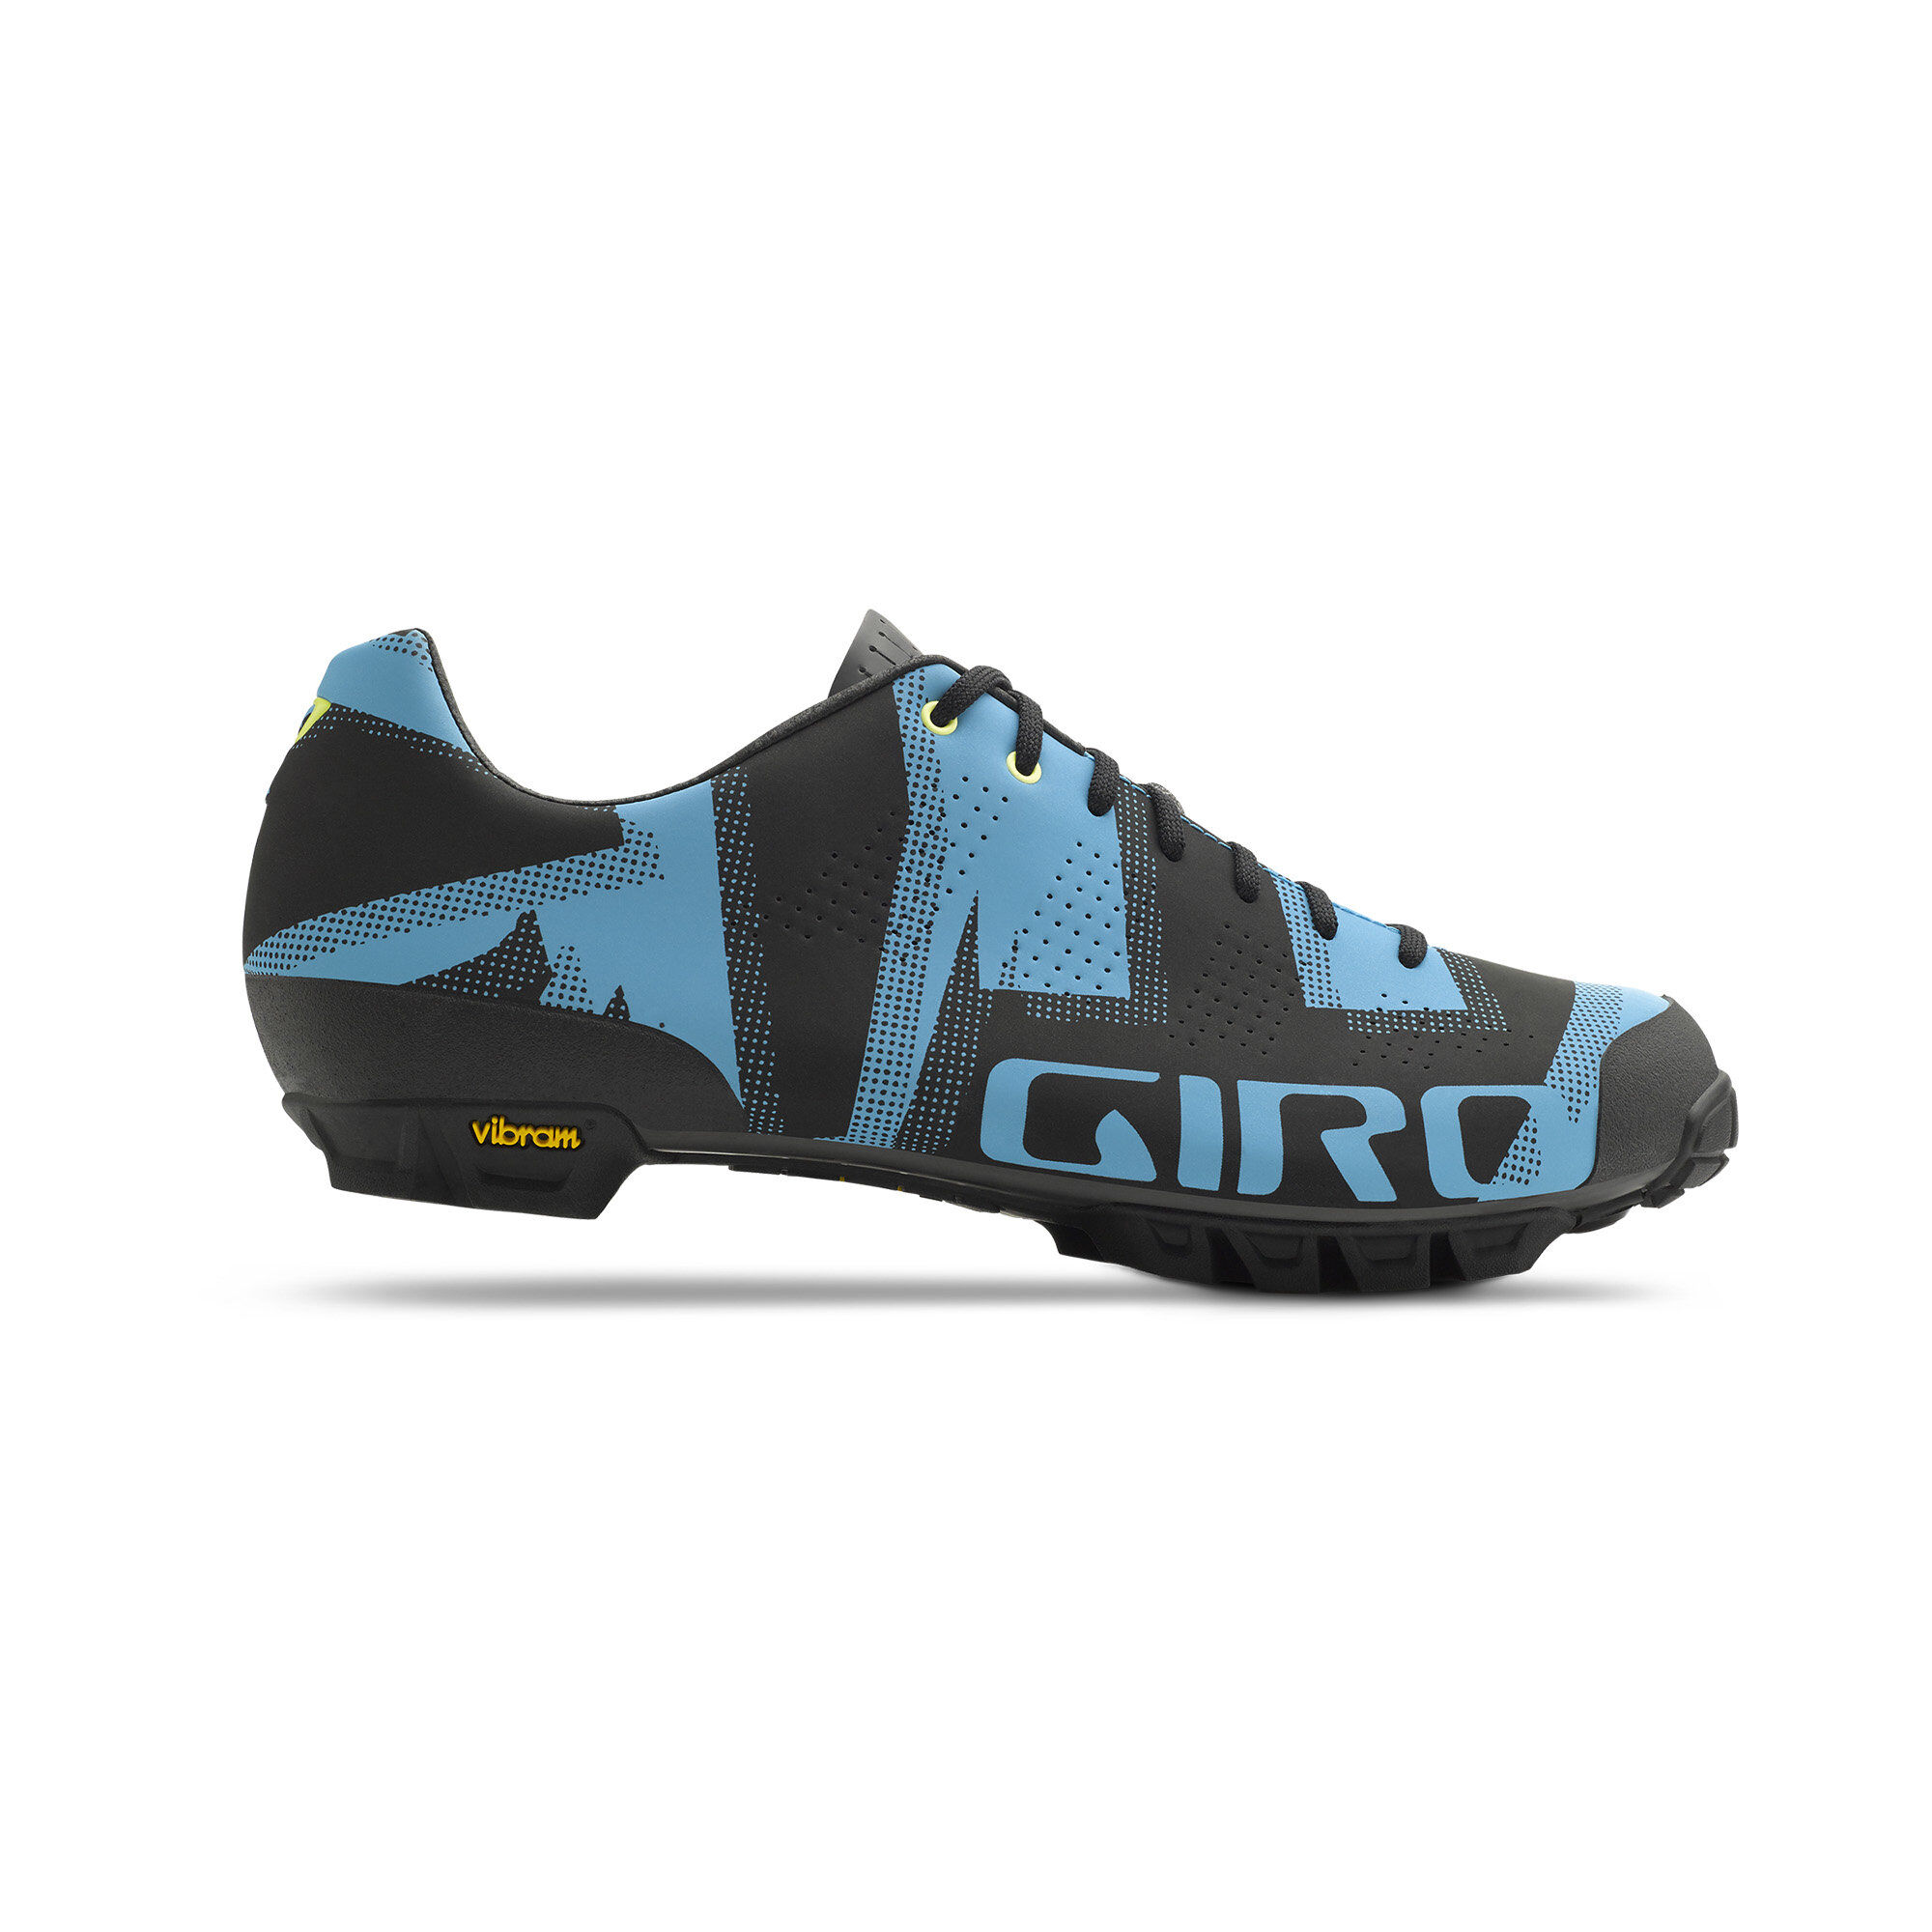 Giro Empire VR90 - Scarpe ciclismo - Uomo